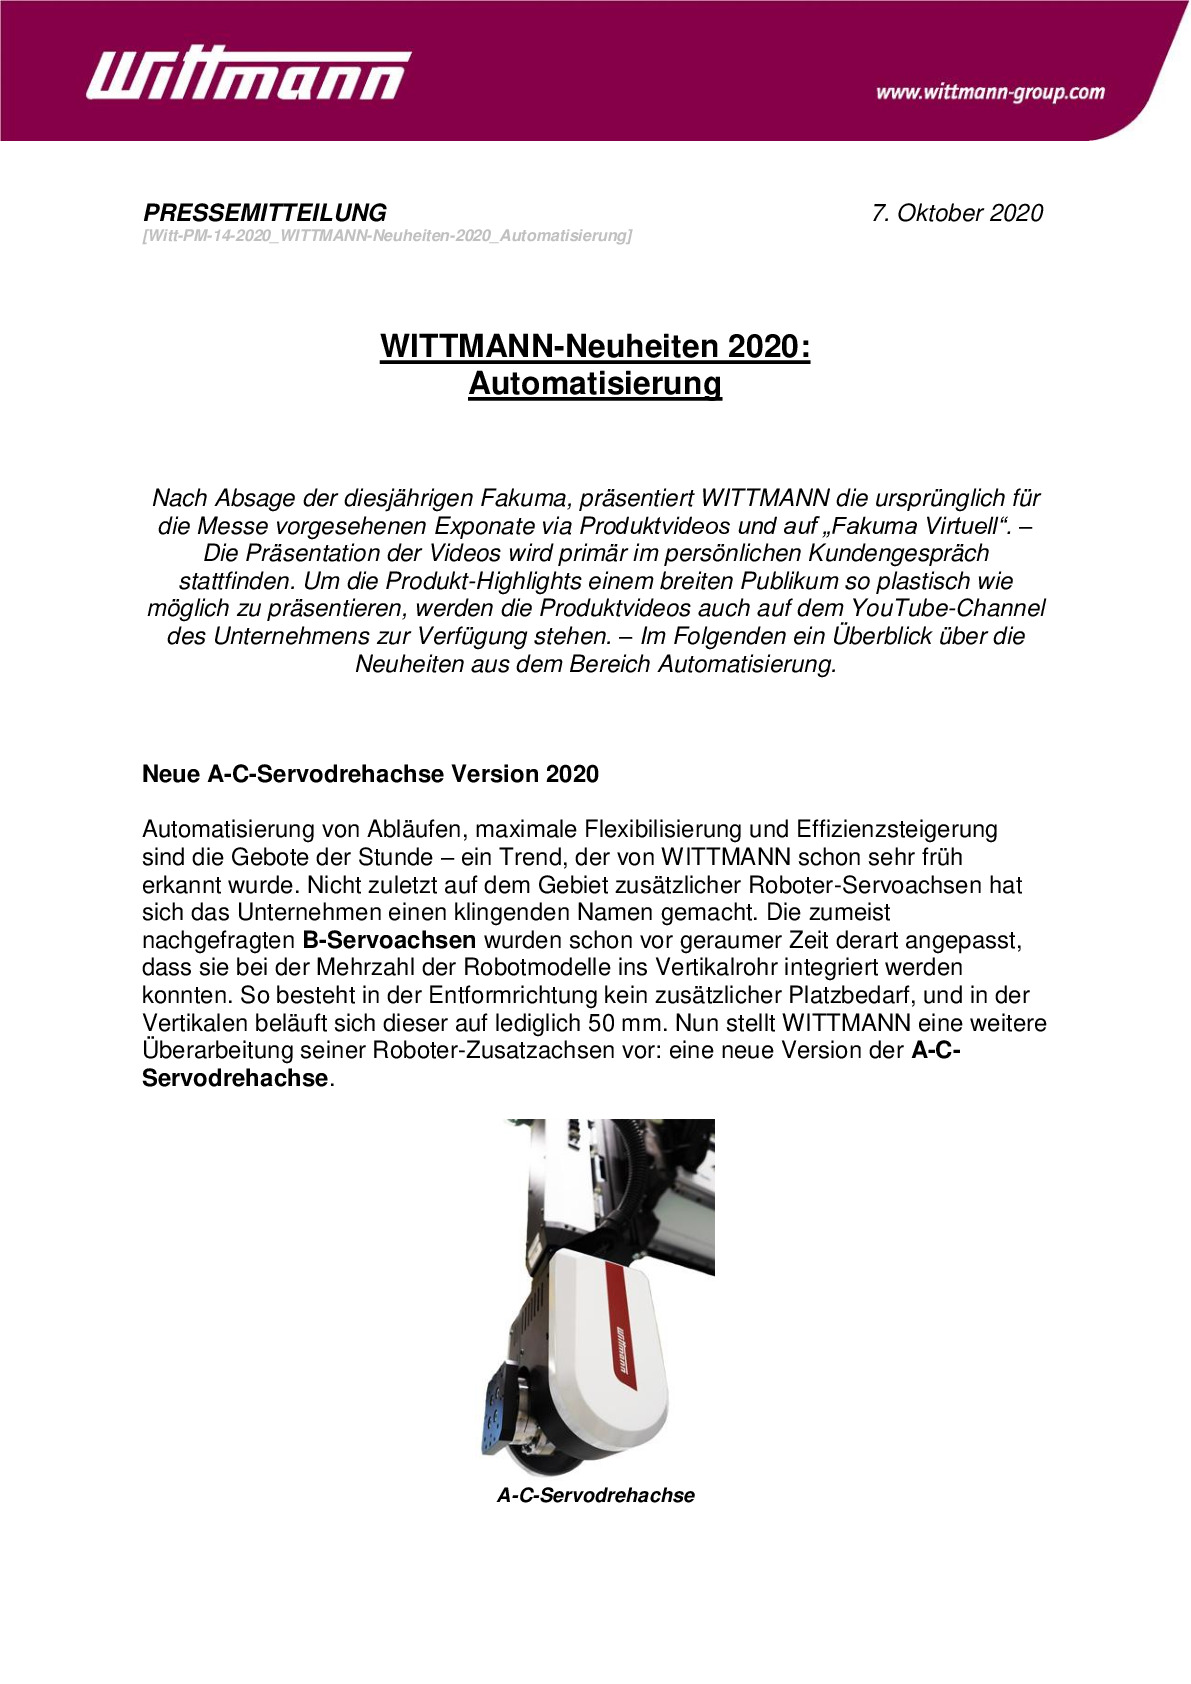 witt-pm-14-2020_wittmann-neuheiten-2020_automatisierung